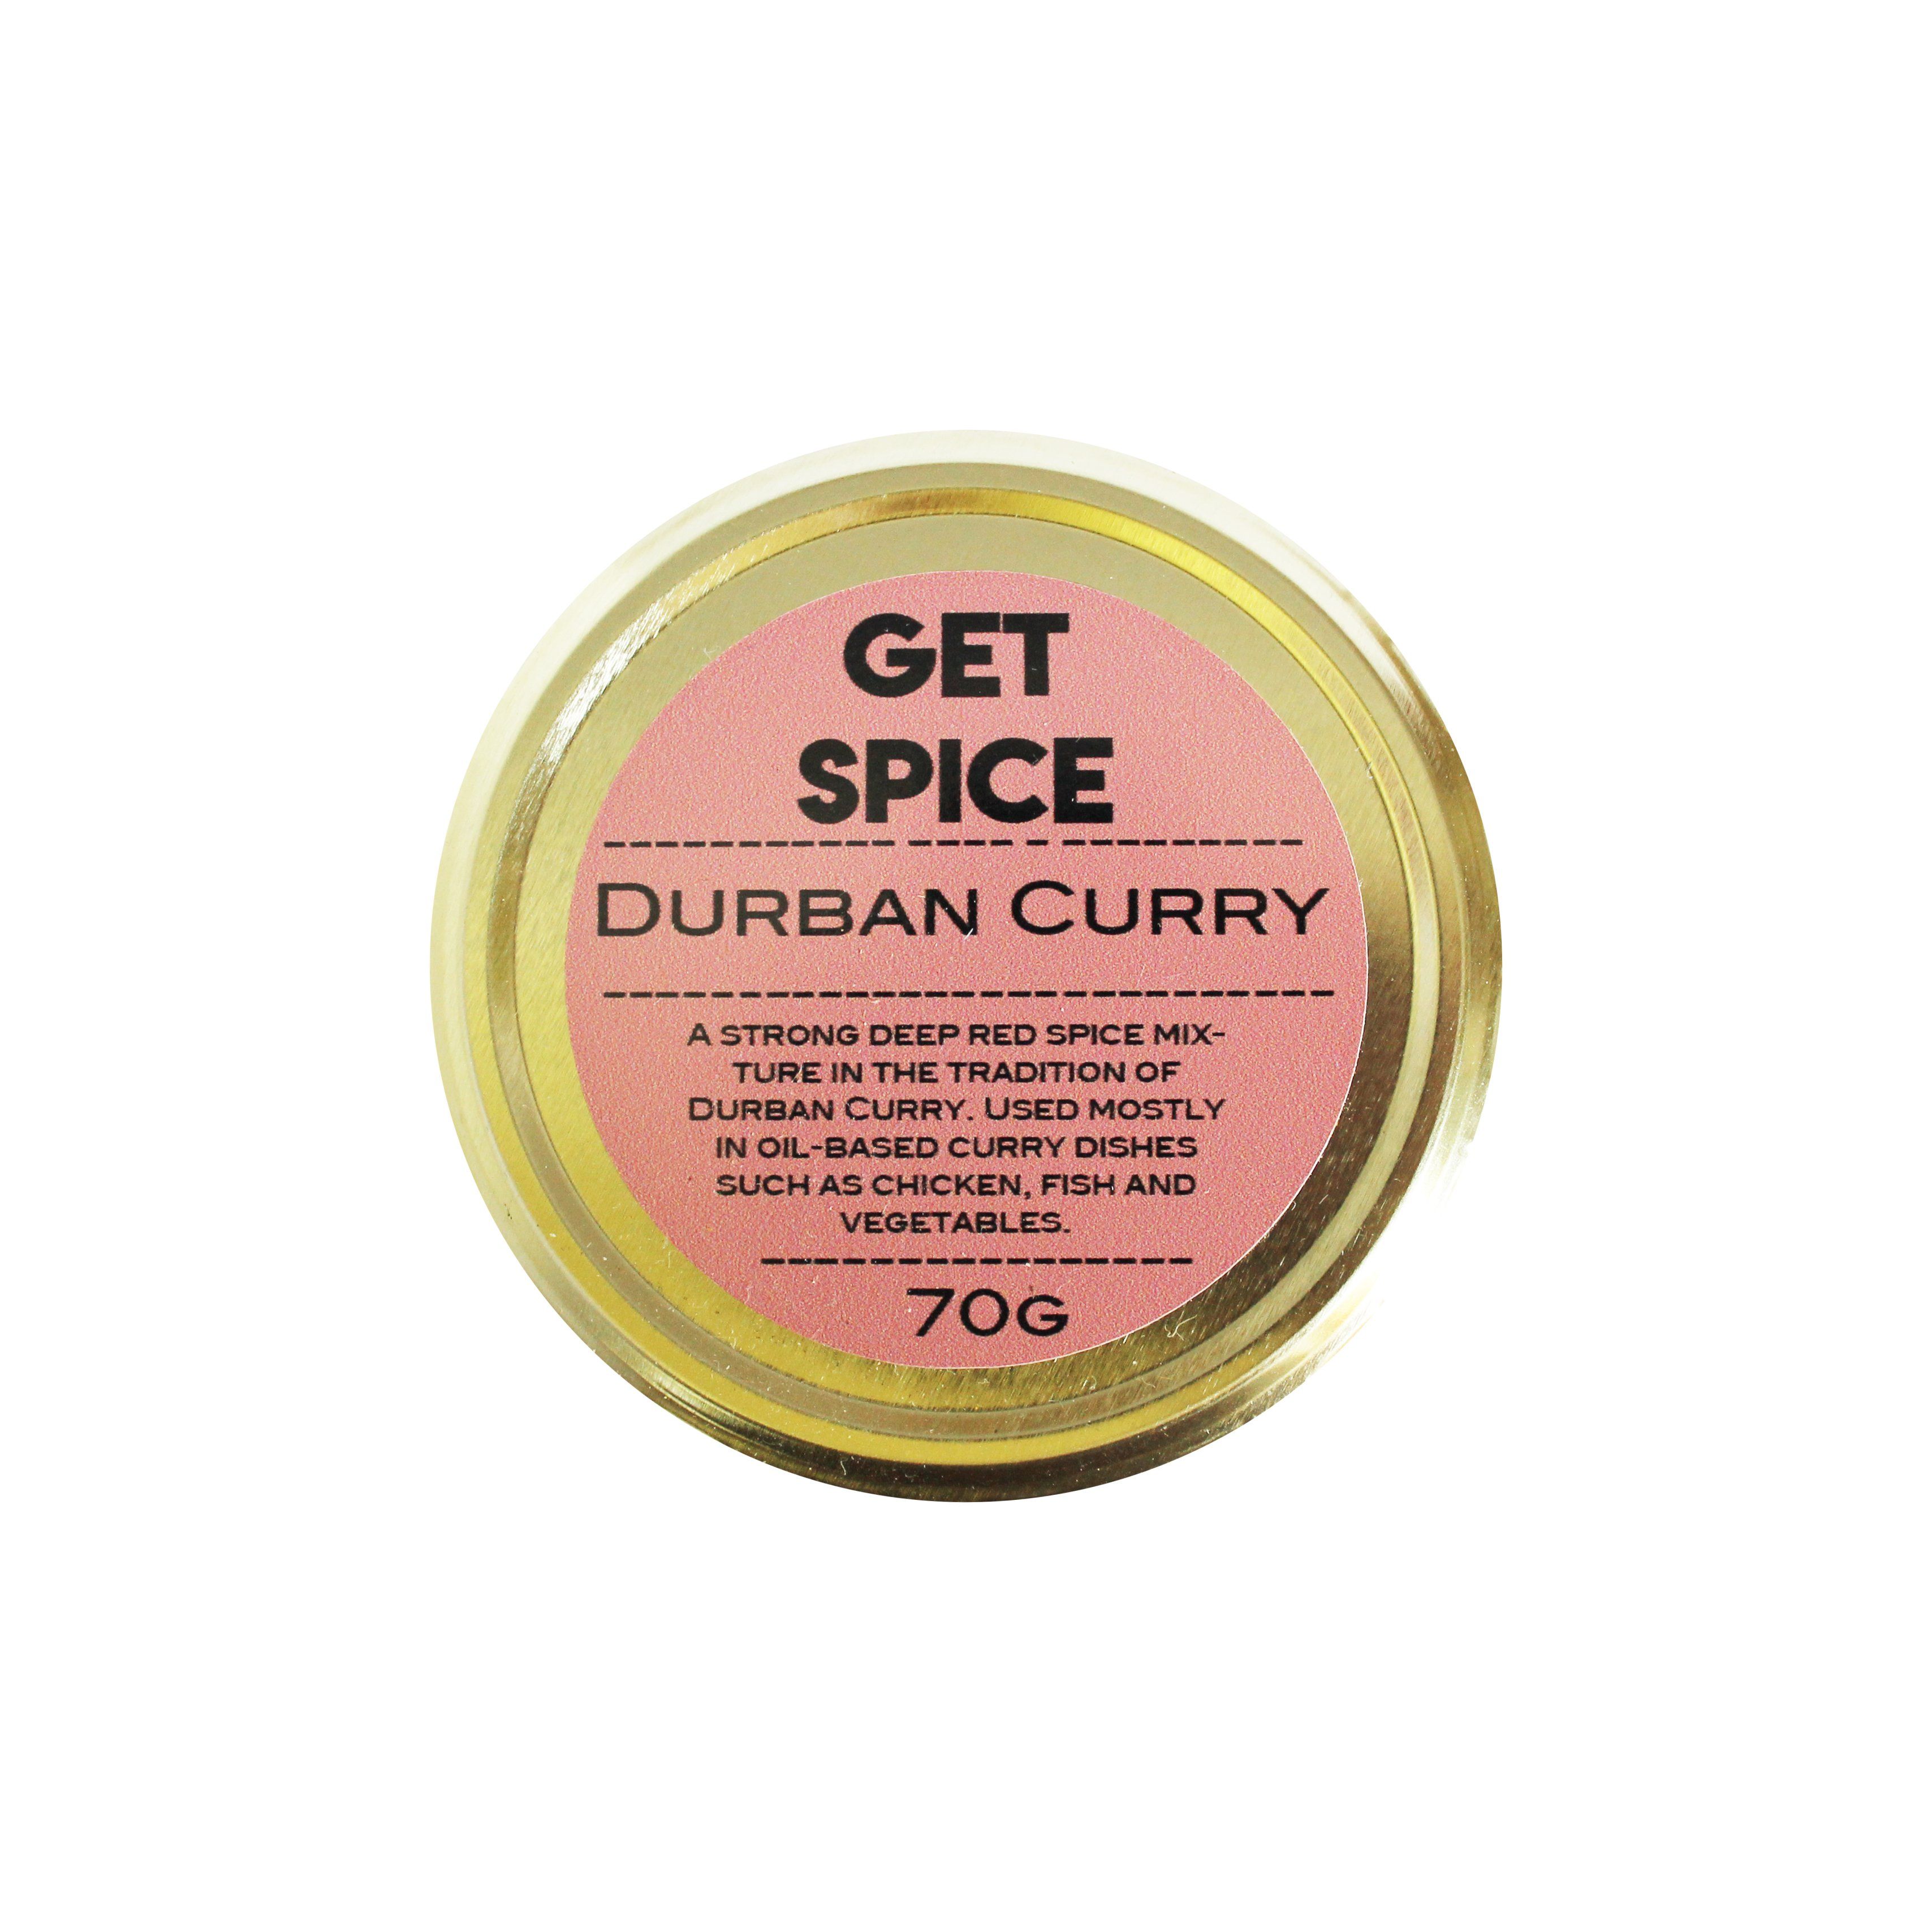 Get Spice Durban Curry 70g food Get Spice